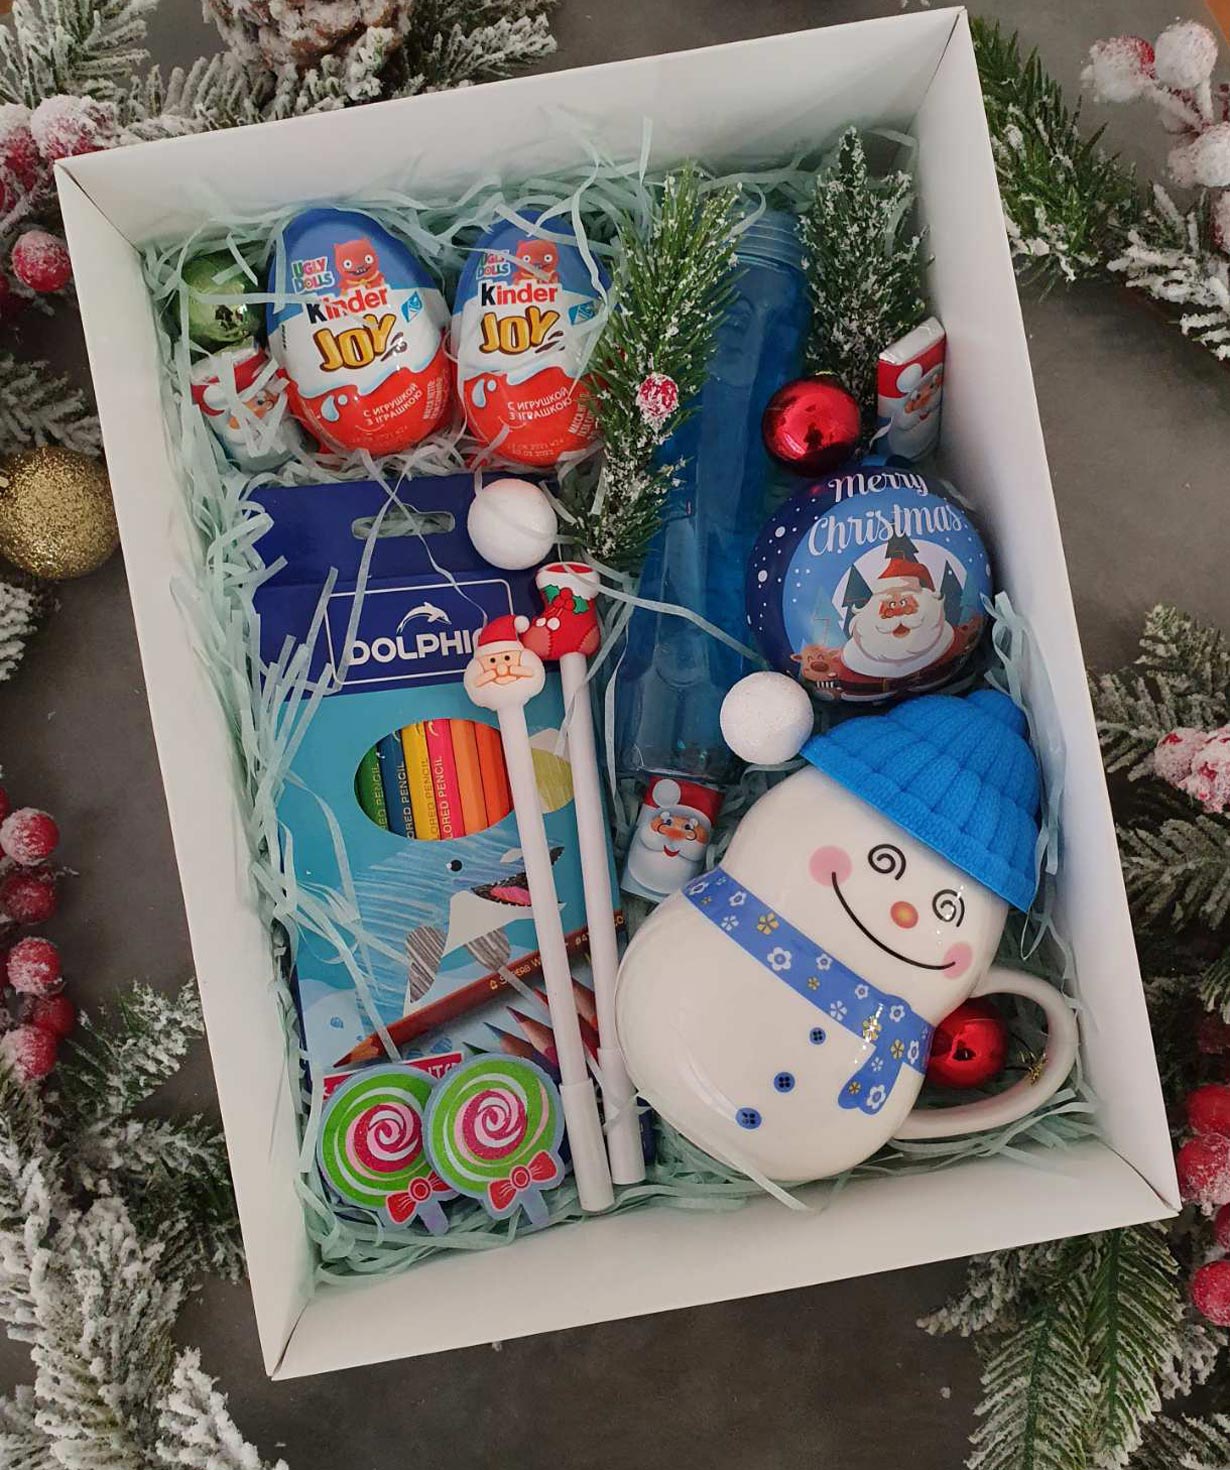 Christmas Mouse with gift box Ornament Christmas Gift for Kids.